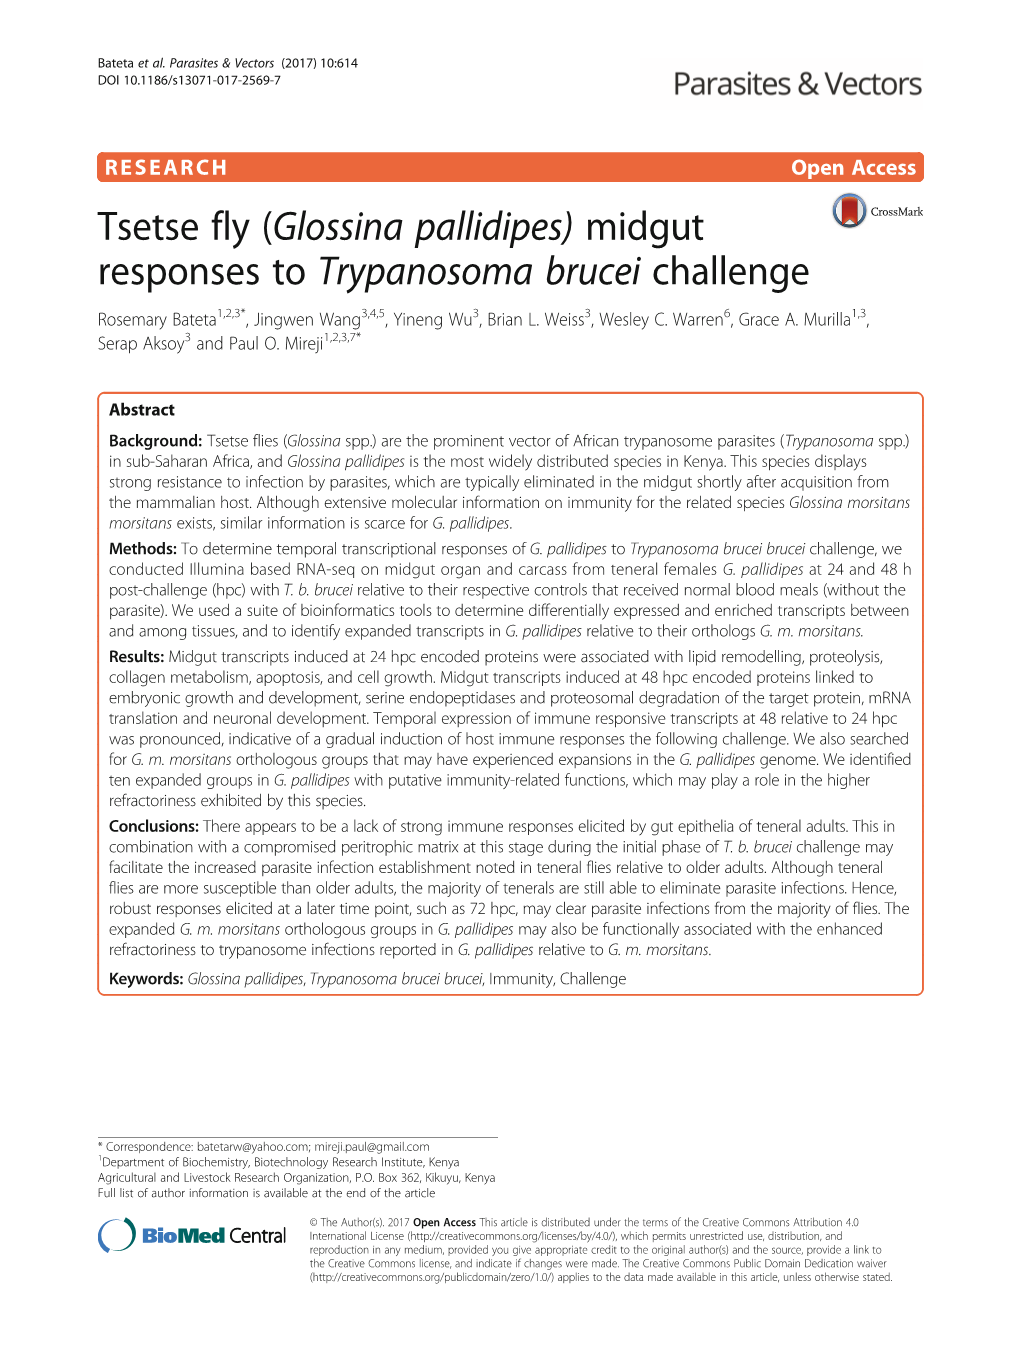 Tsetse Fly (Glossina Pallidipes) Midgut Responses to Trypanosoma Brucei Challenge Rosemary Bateta1,2,3*, Jingwen Wang3,4,5, Yineng Wu3, Brian L